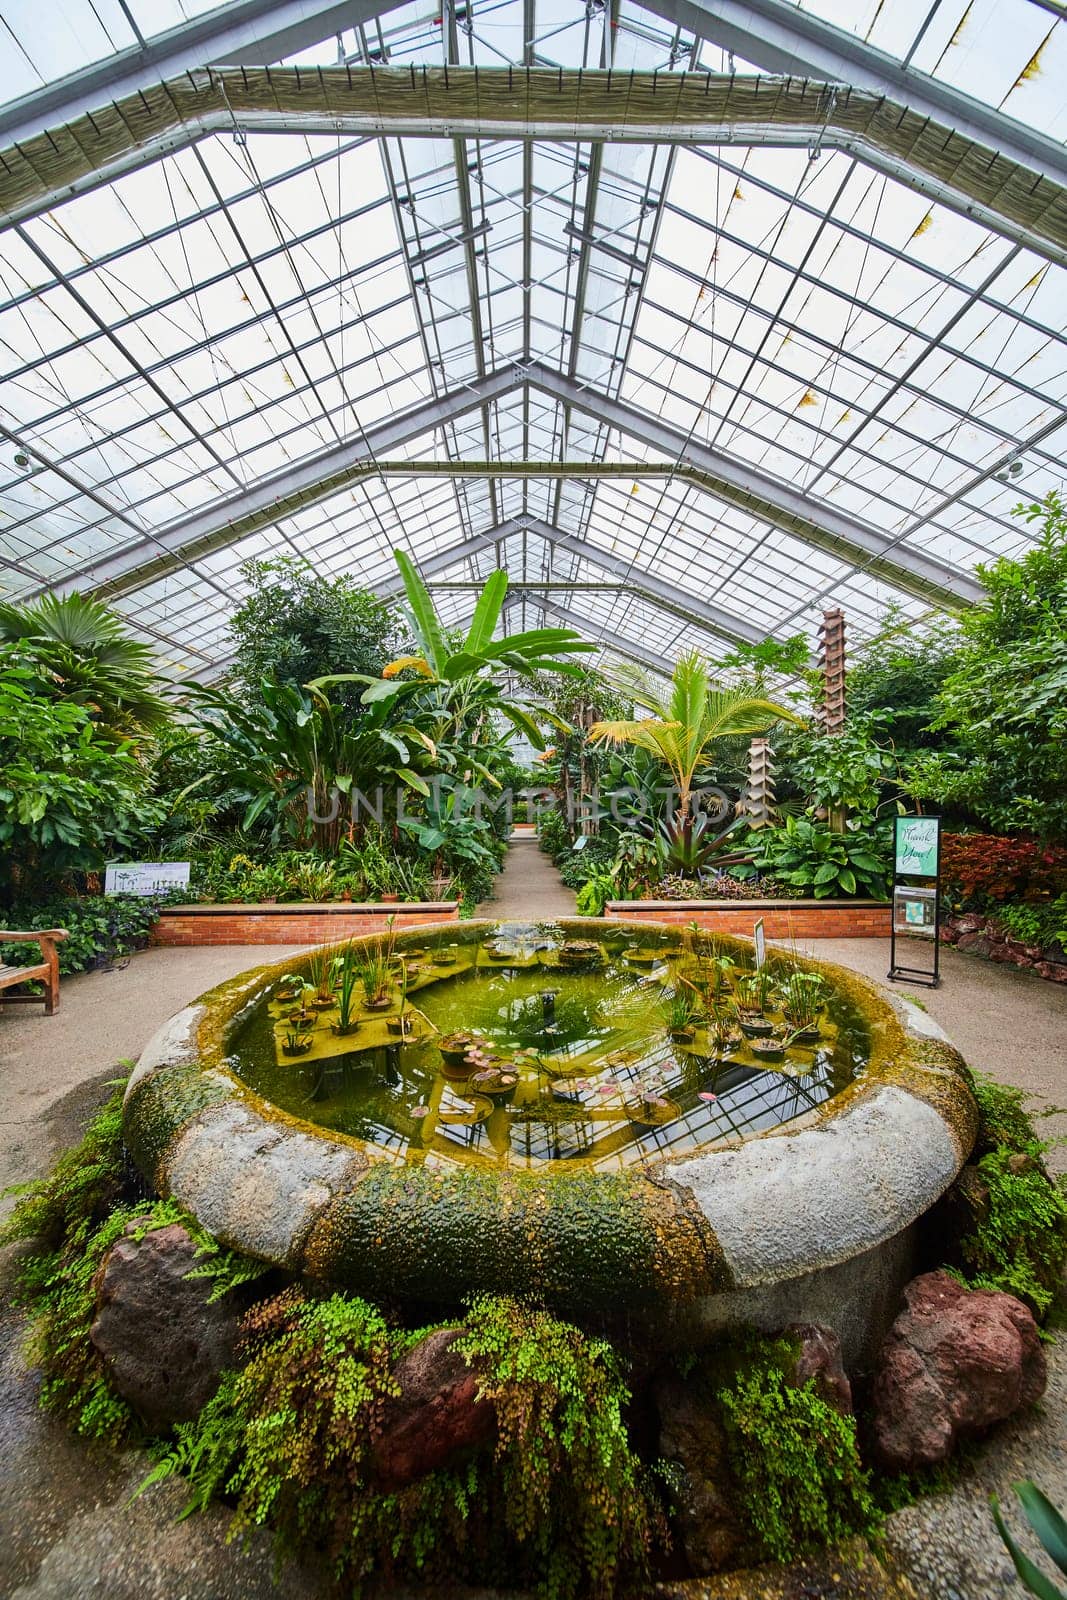 Lush Tropical Greenery in Matthaei Botanical Gardens, Michigan - Indoor Urban Oasis Under Glass Roof